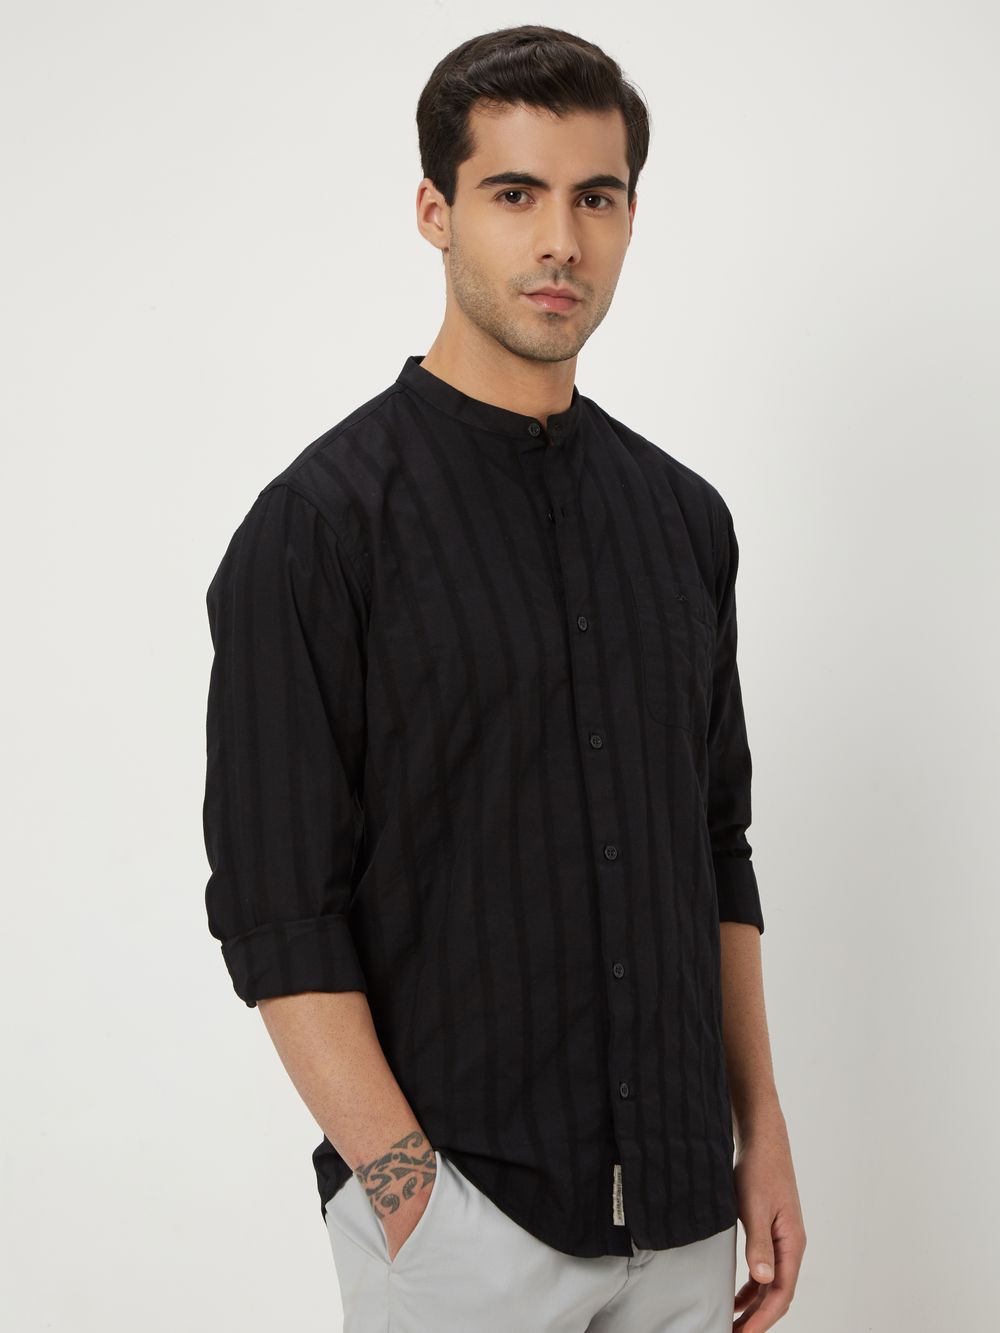 Black Textured Plain Slim Fit Casual Shirt